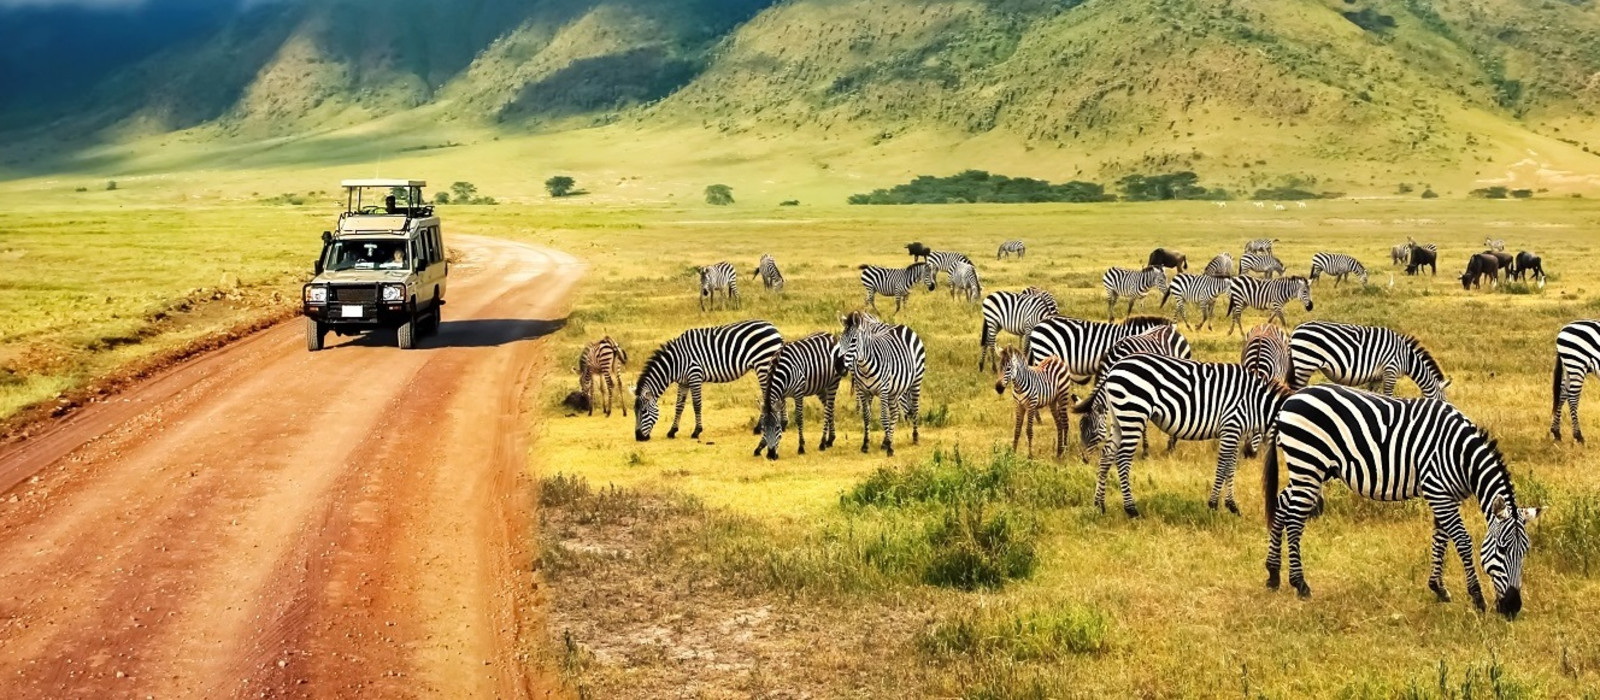 afrika reise strand und safari